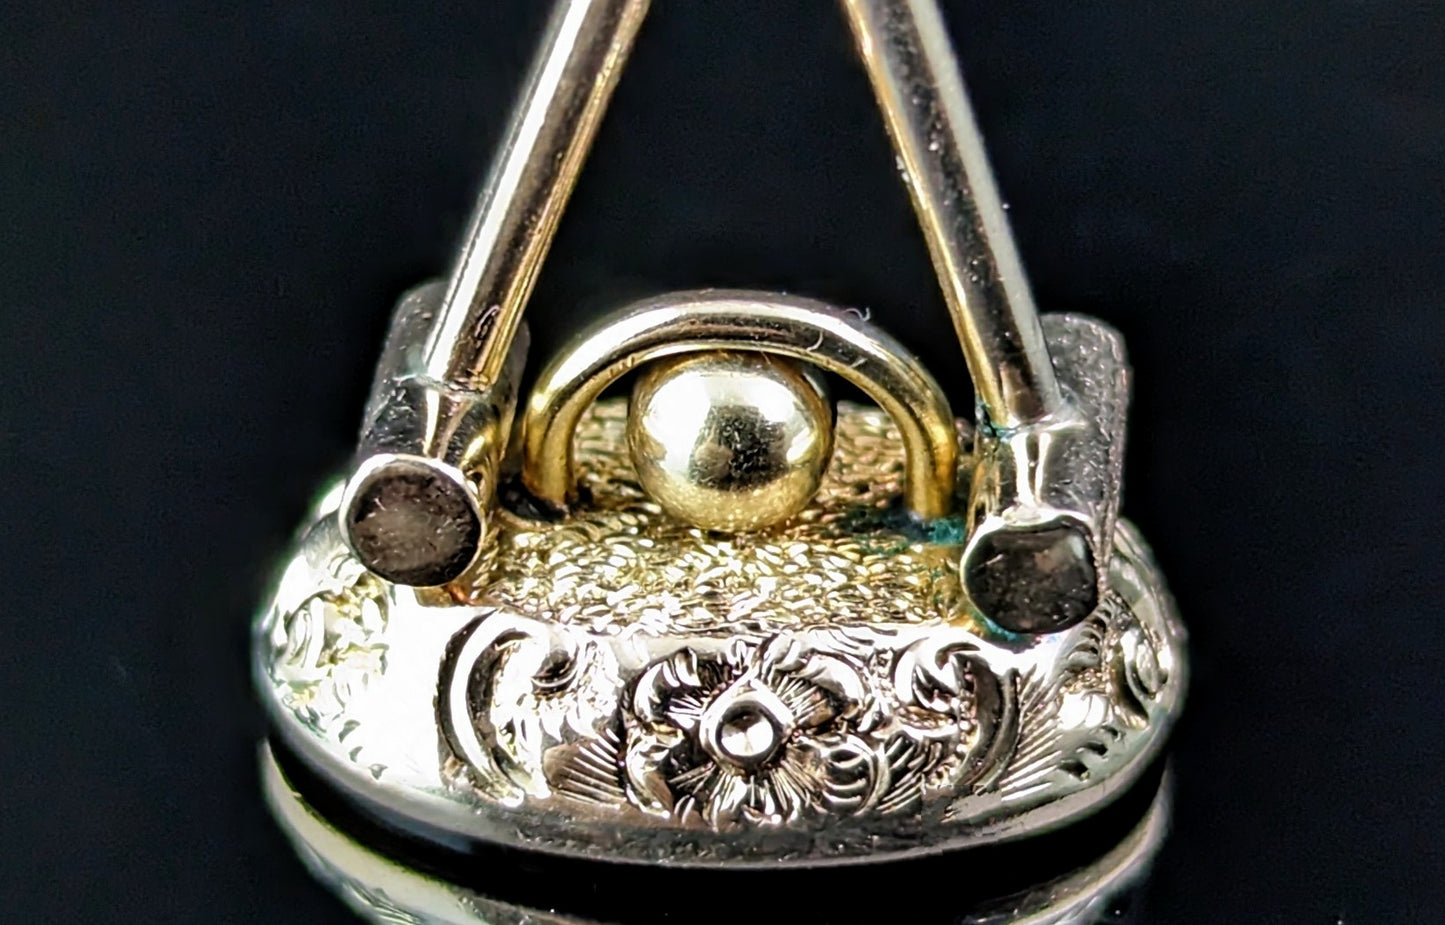 Antique 9ct gold Croquet seal fob pendant, Carnelian